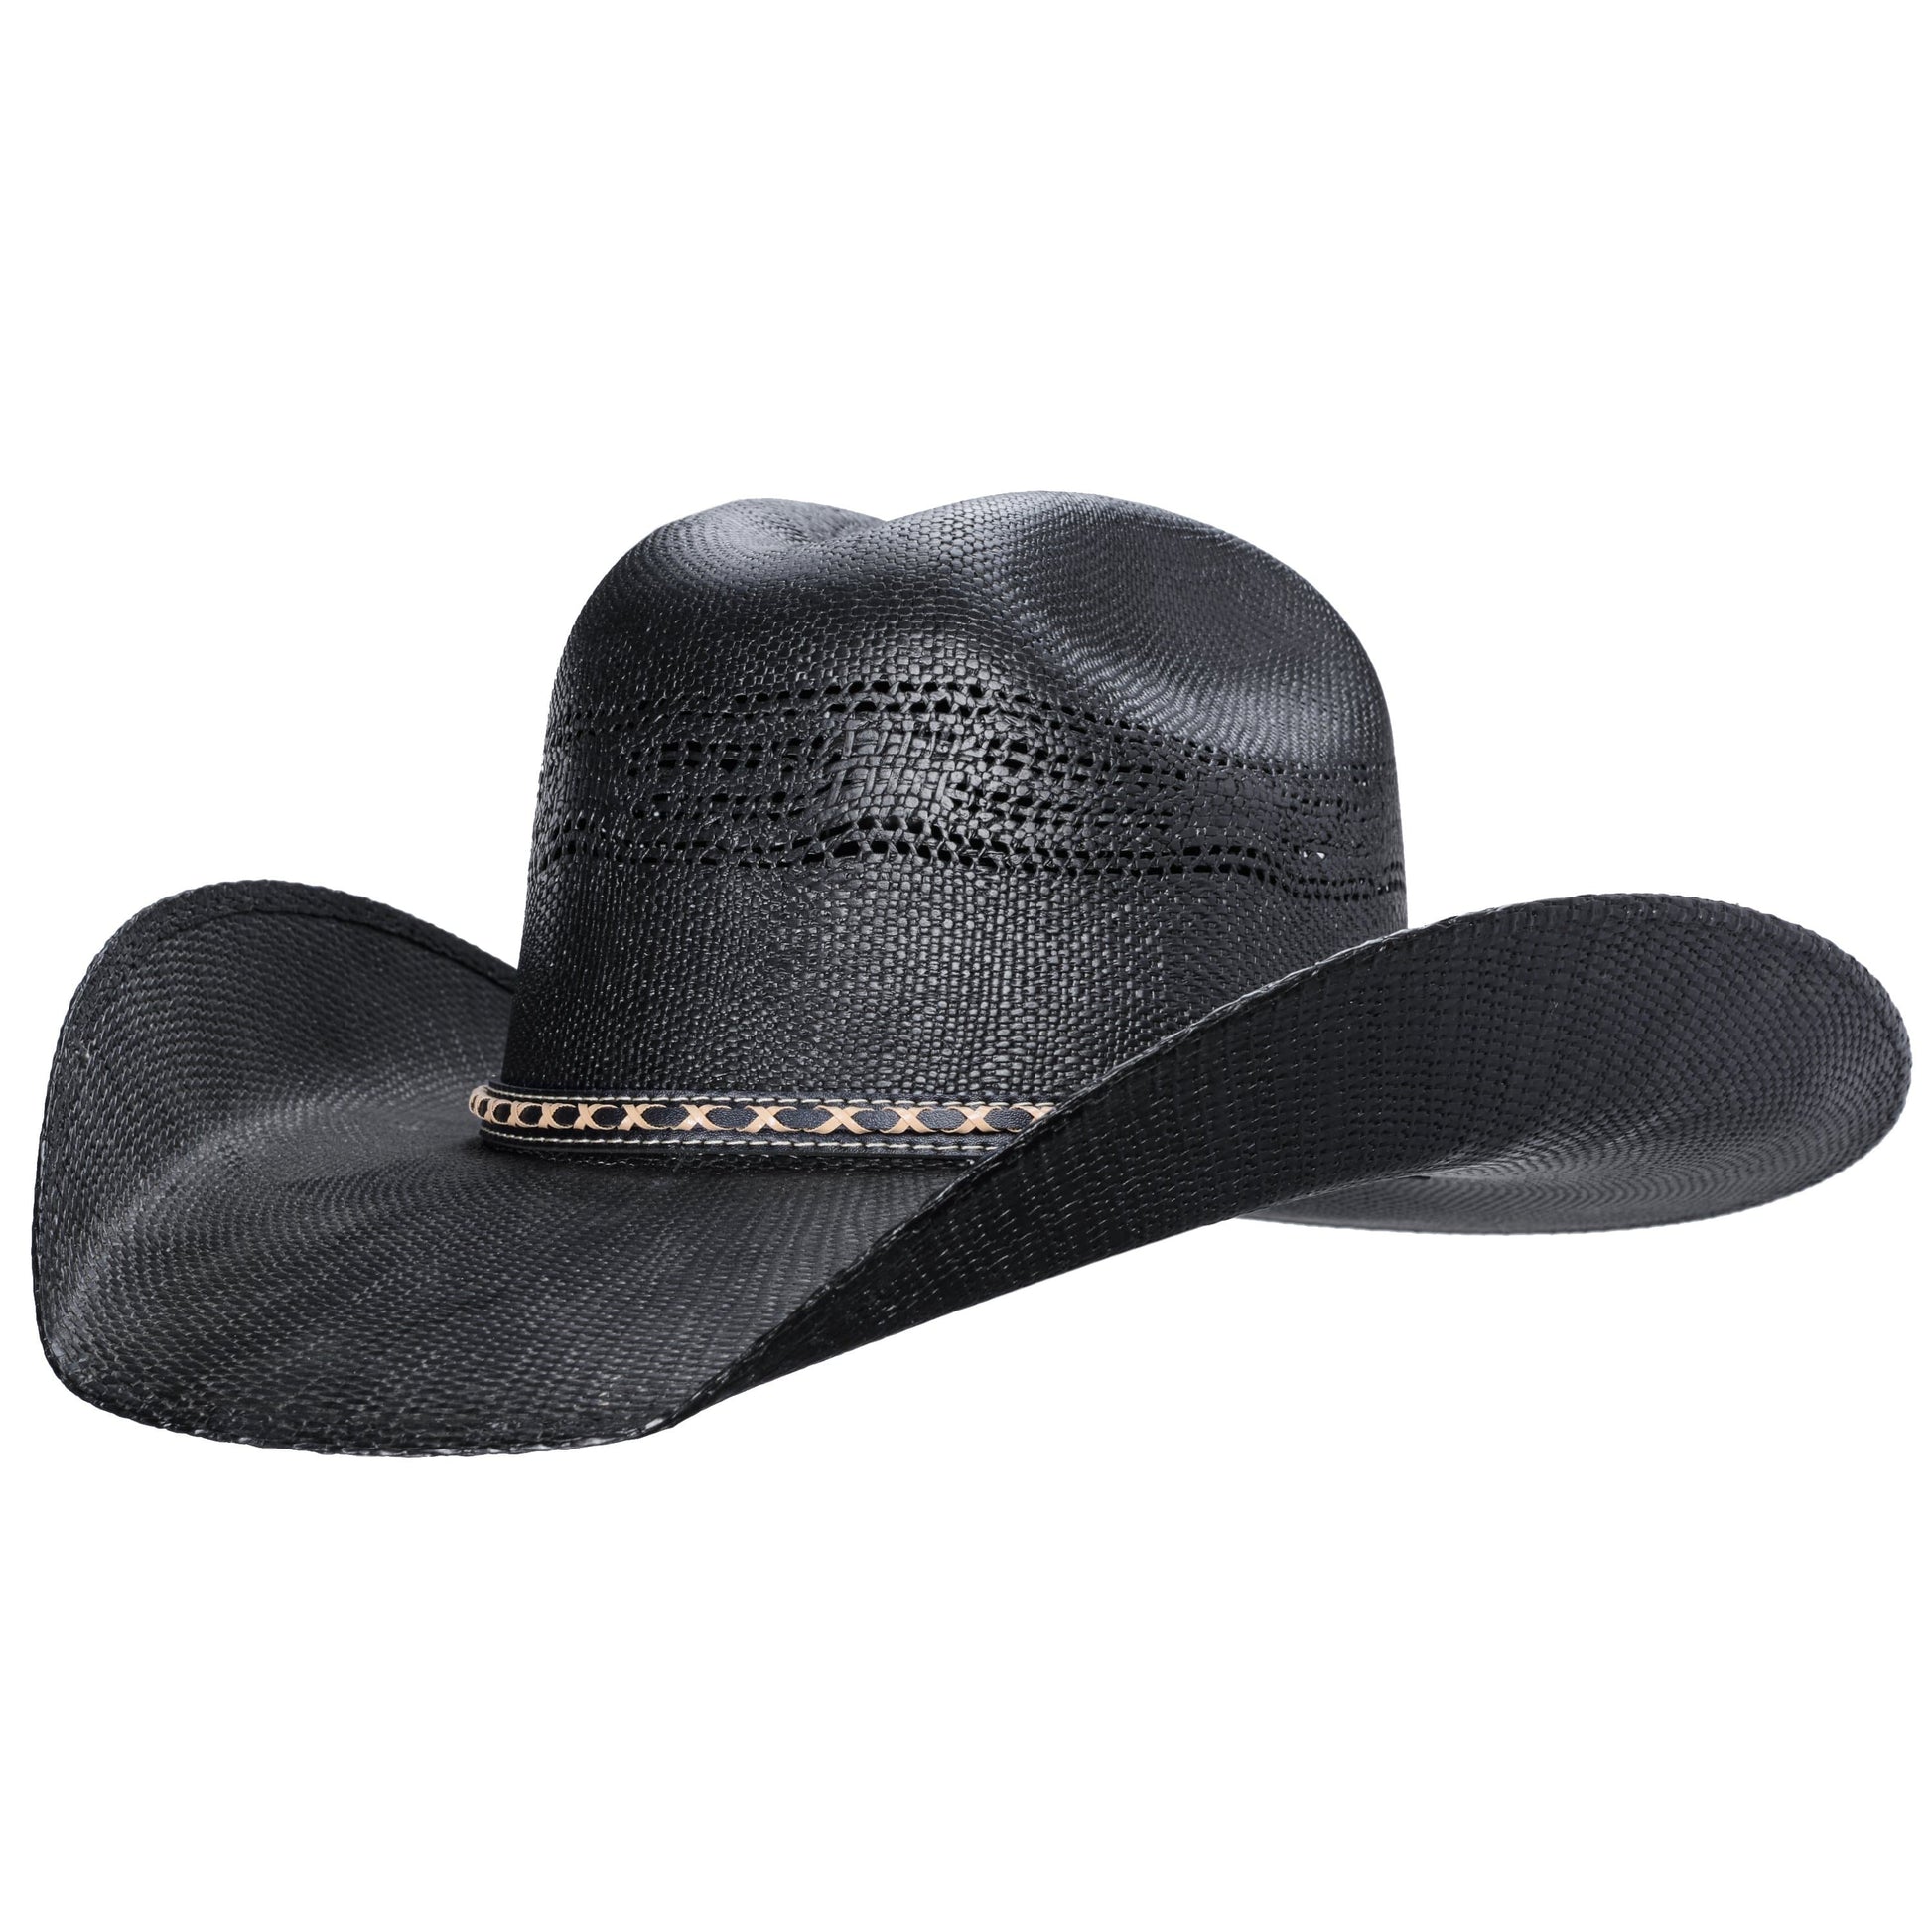 Colt Black Straw Bangora Cowboy Hat - Justin Series Extra Large Fits 7-5/8 to 7-3/4